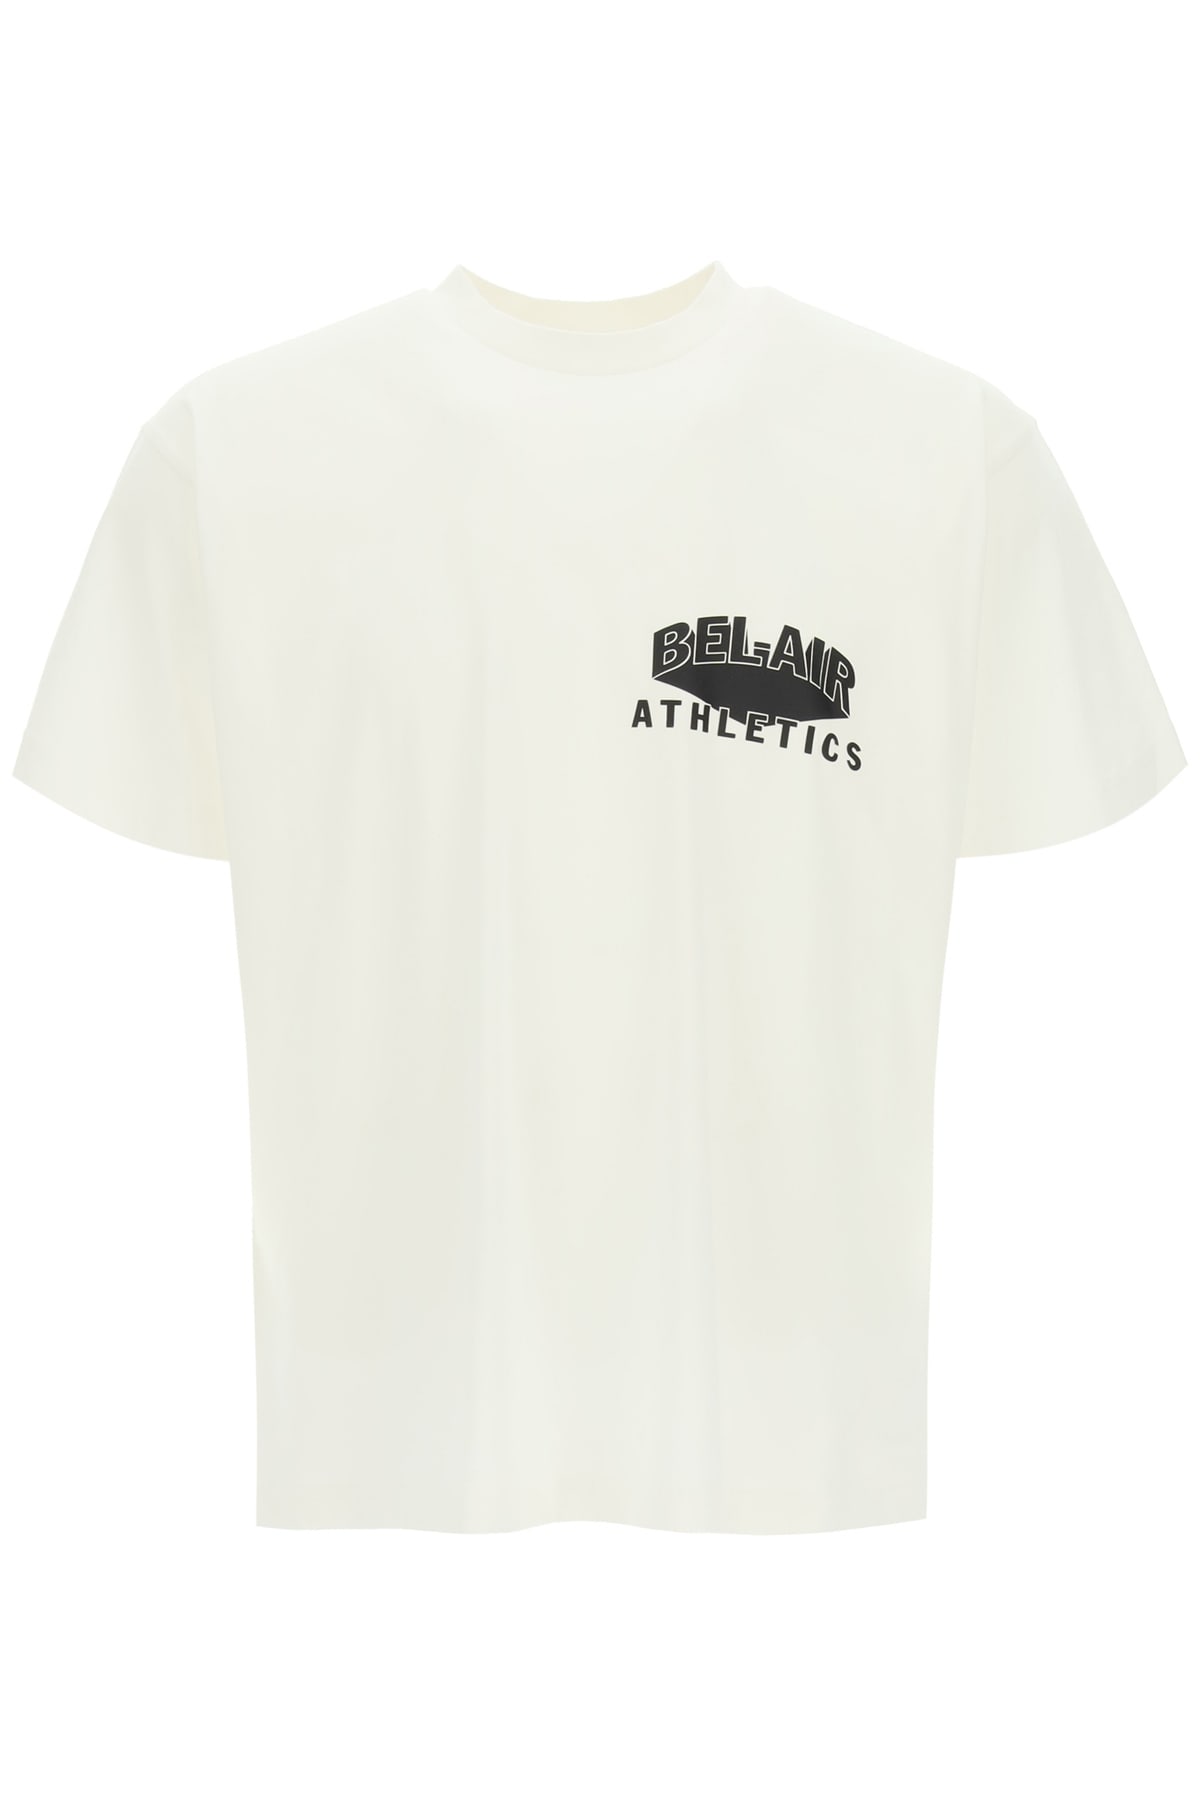 Bel-Air Athletics Arch Logo T-shirt